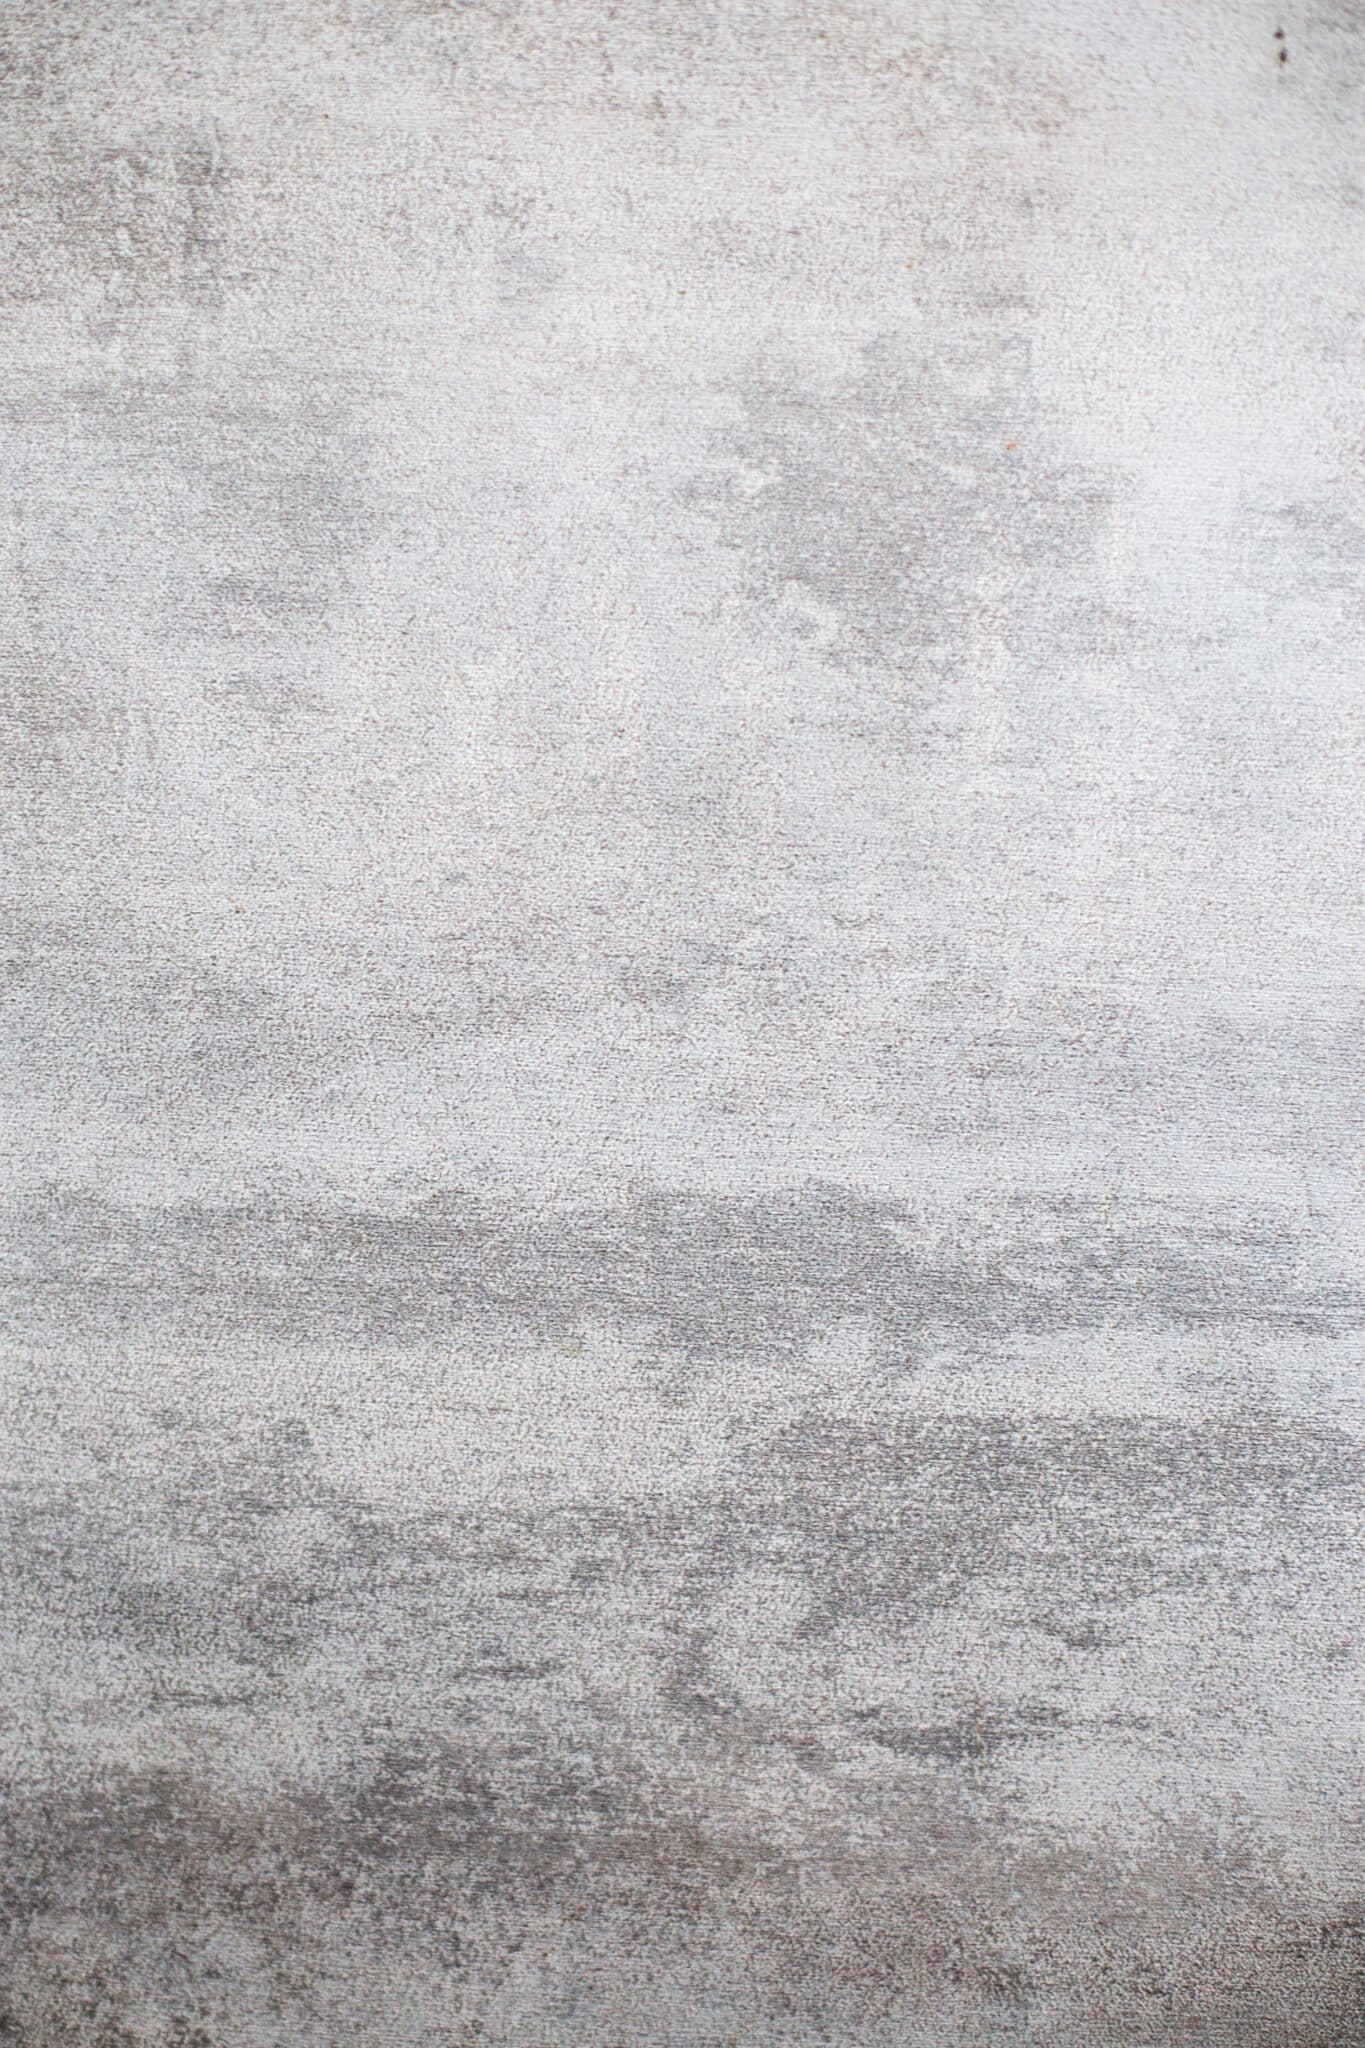 concrete background. a gray concrete wall closeup